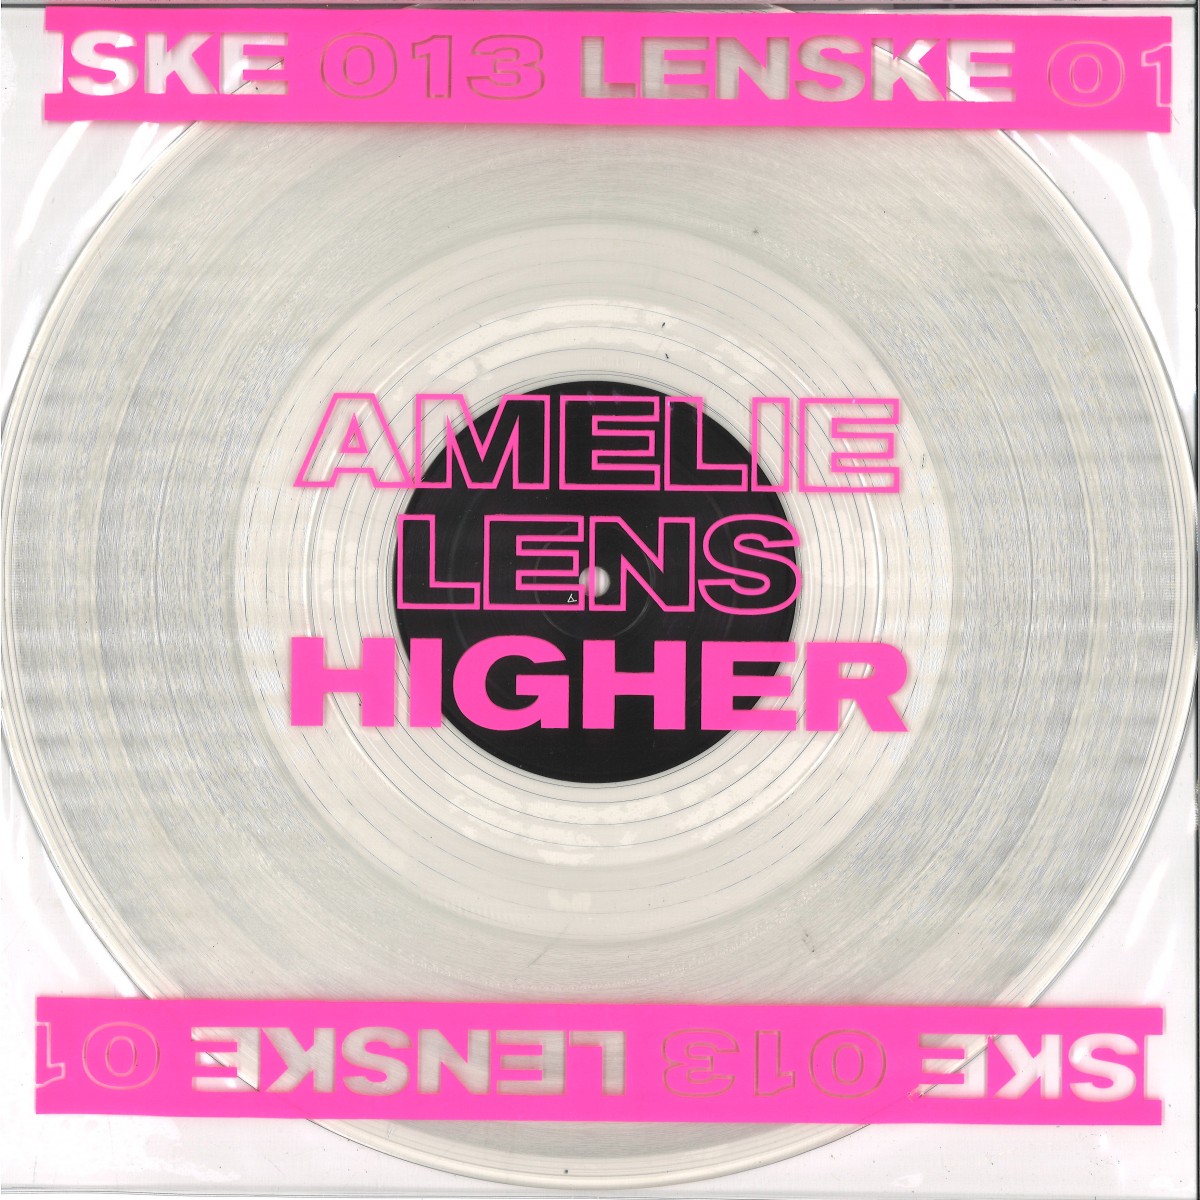 AMELIE LENS - HIGHER EP / LENSKE REC. LENSKE013 - Vinyl